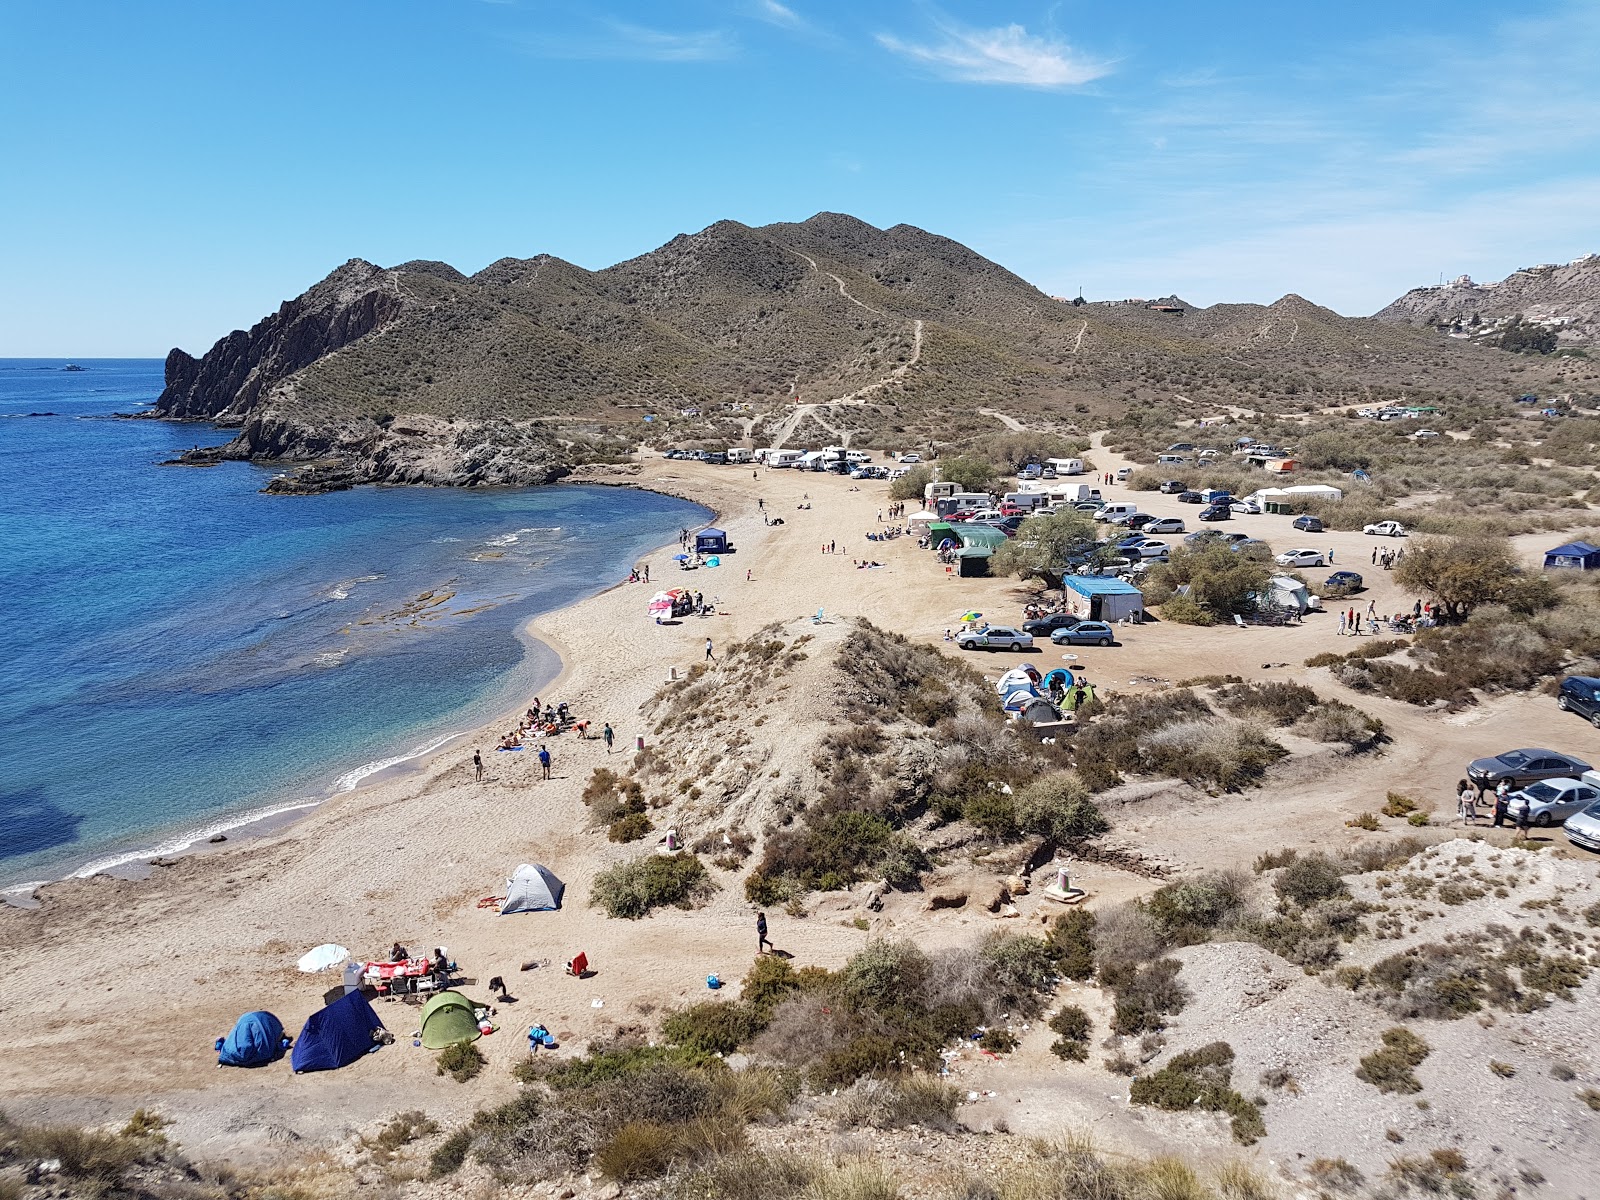 Foto di Playa del Arroz con una superficie del sabbia grigia